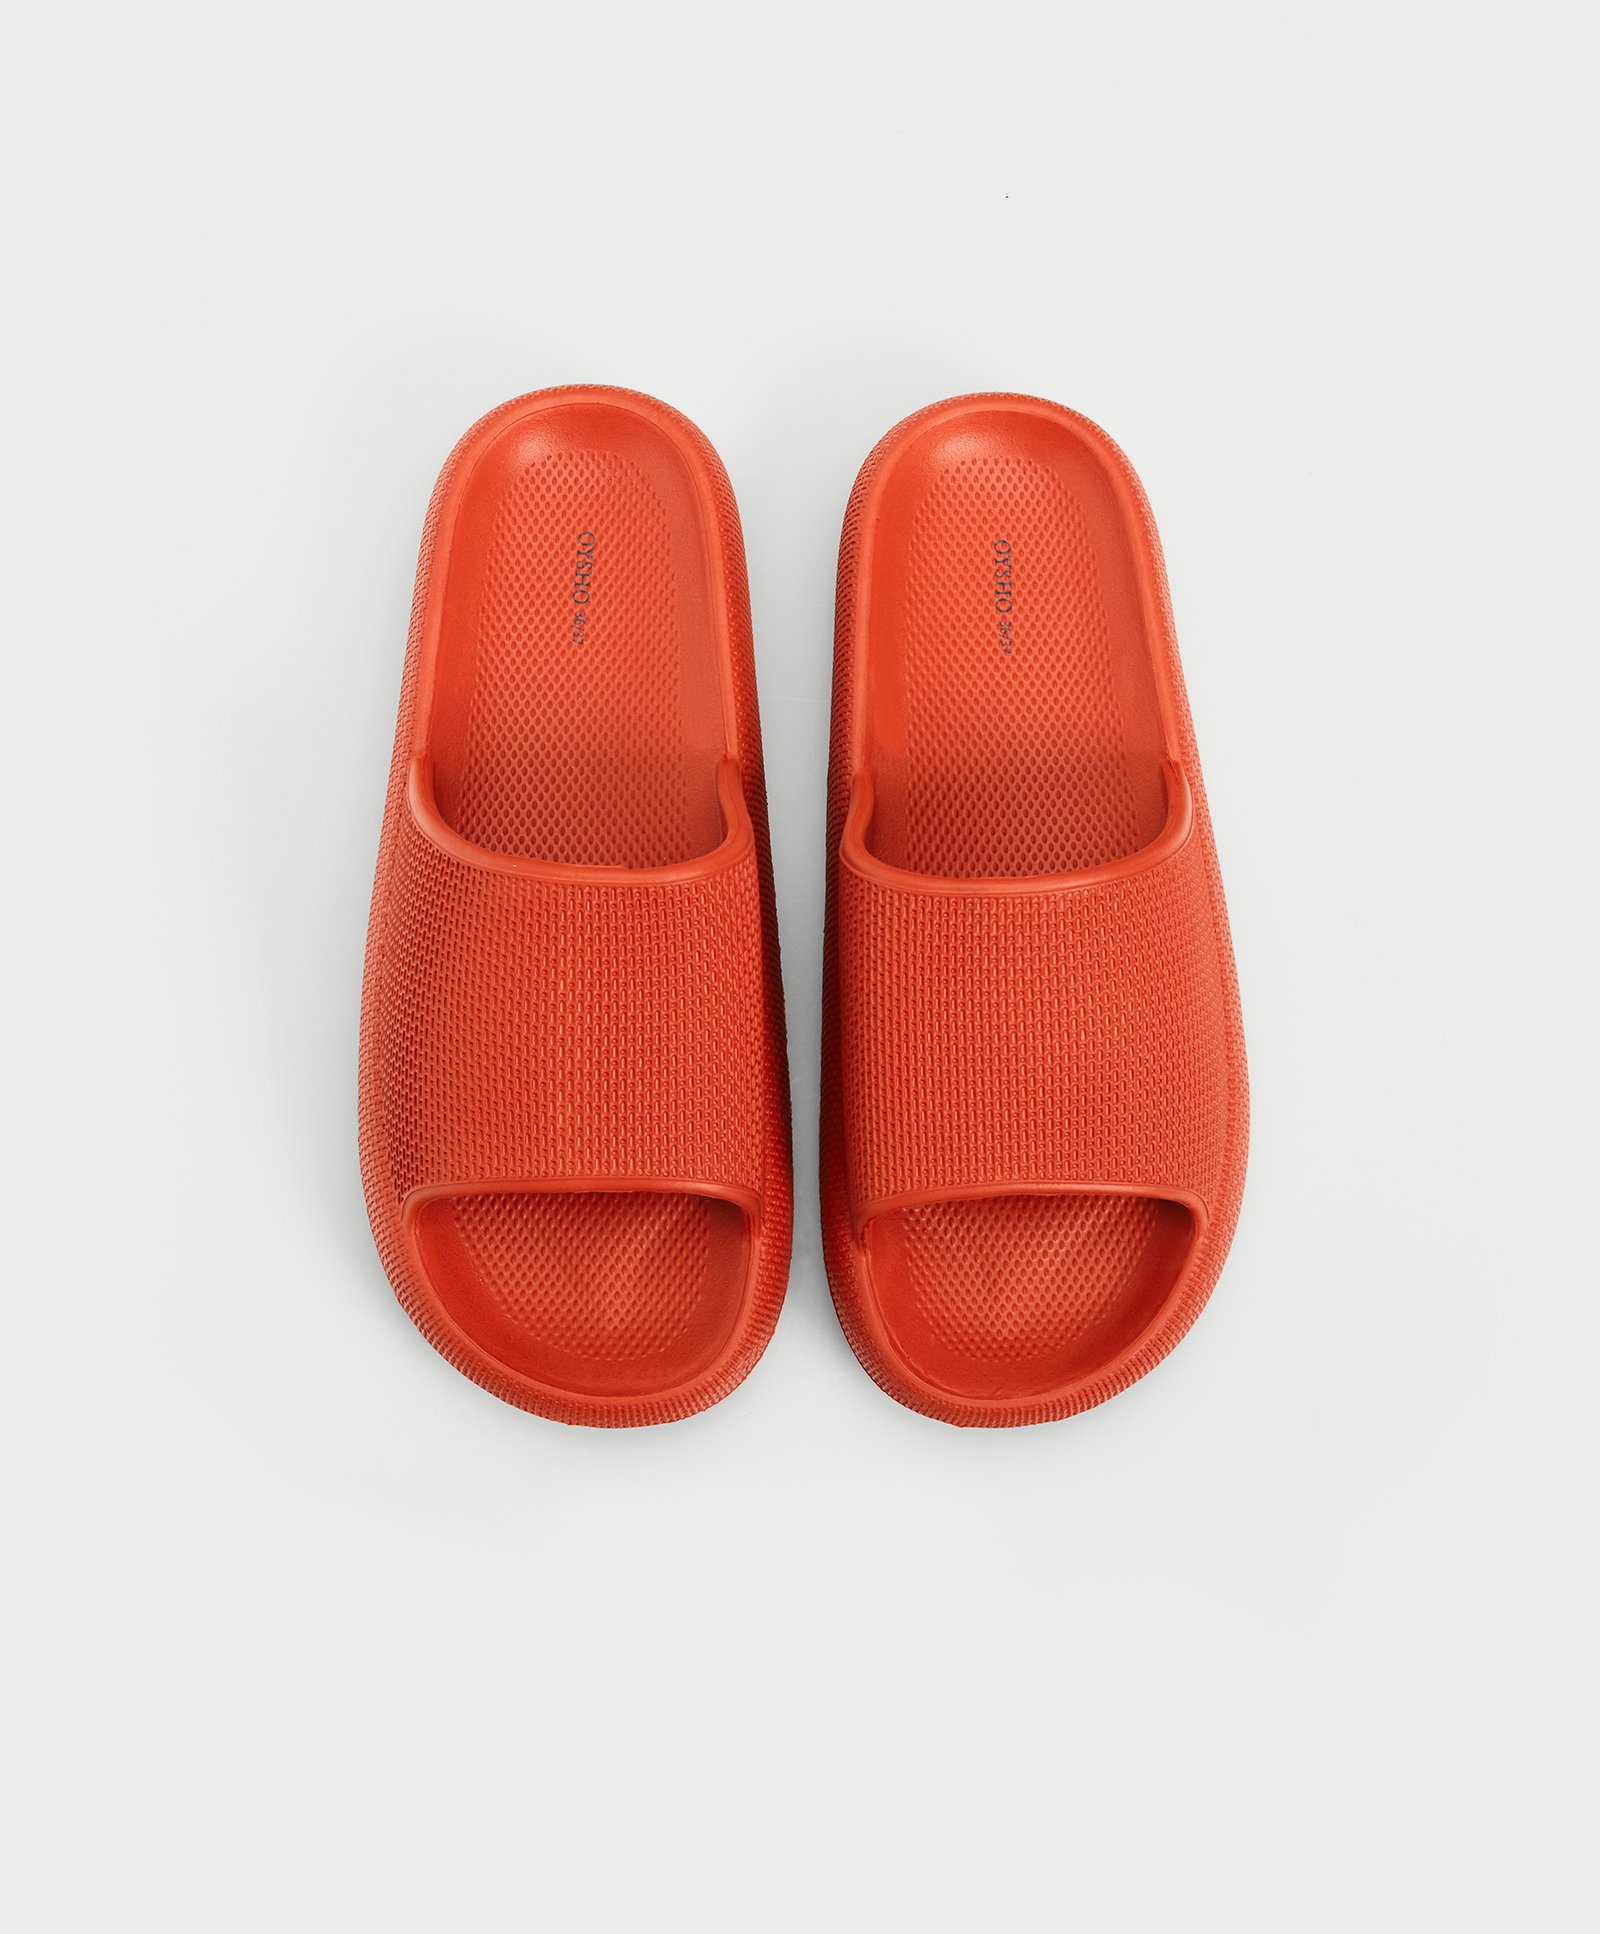 Flatform sandals